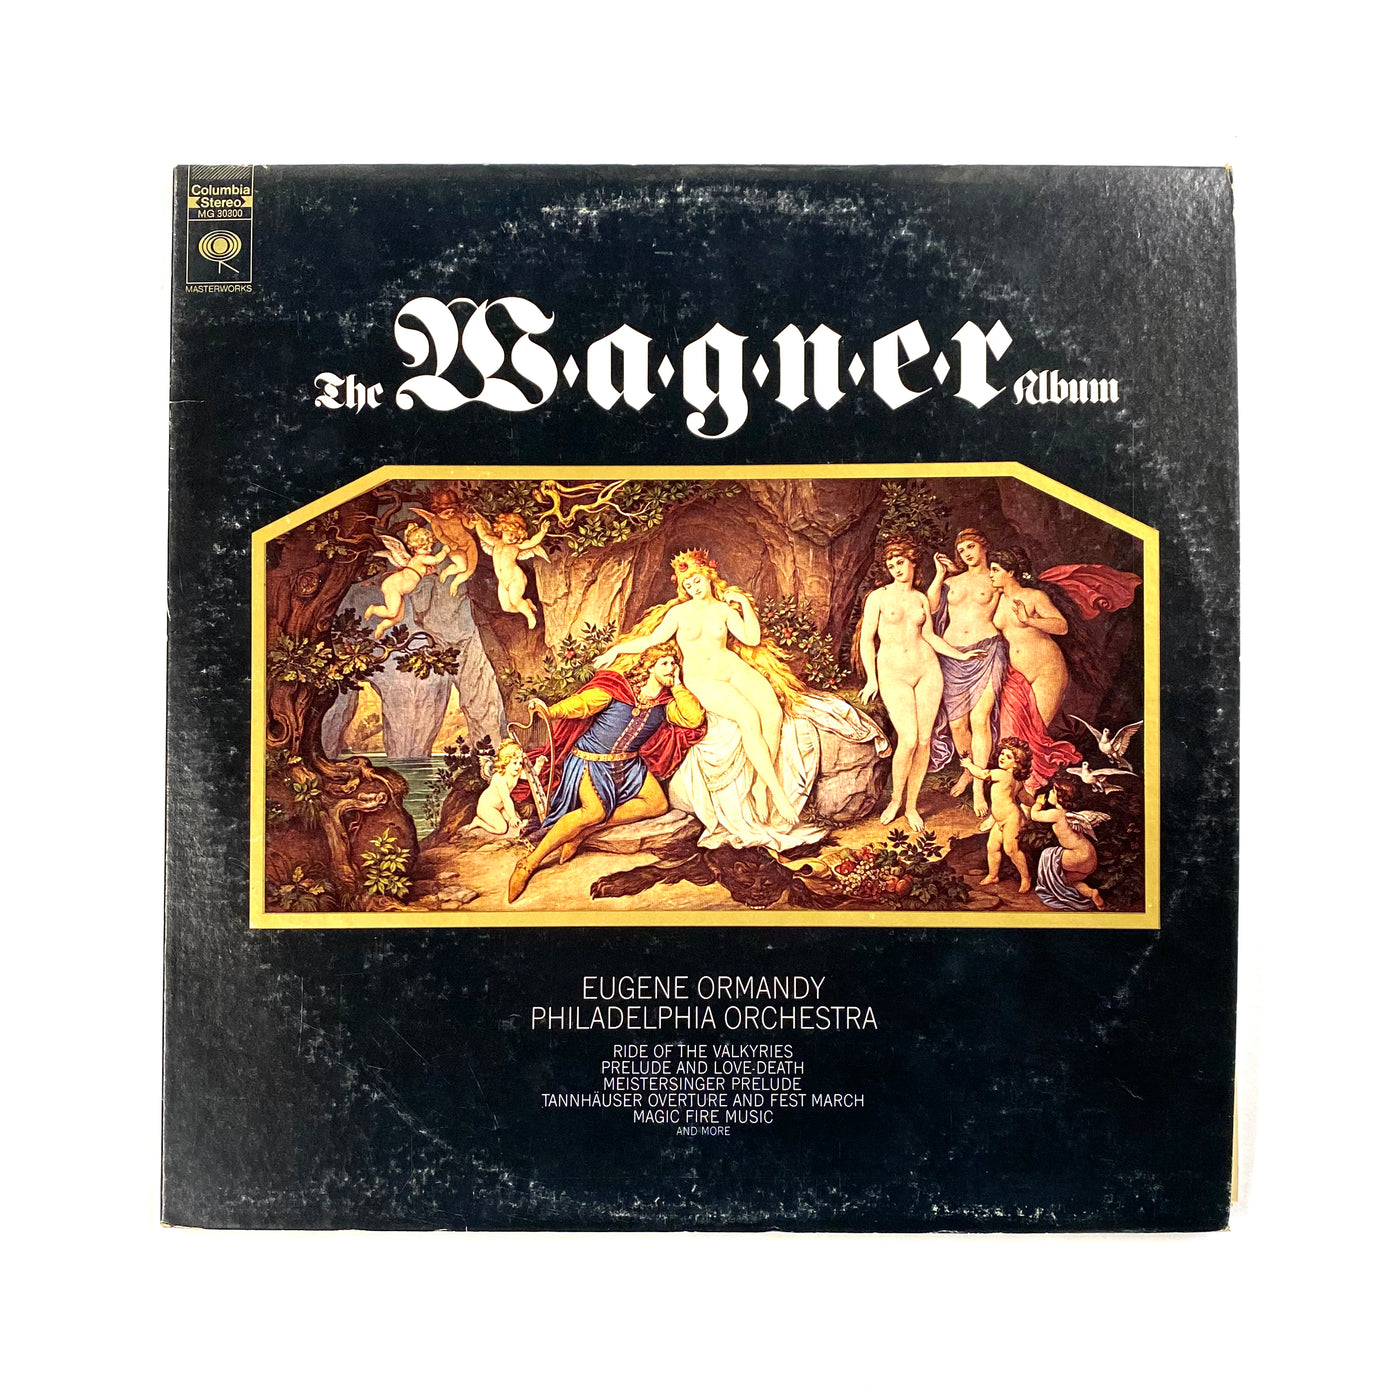 Richard Wagner / Eugene Ormandy, The Philadelphia Orchestra - The Wagner Album